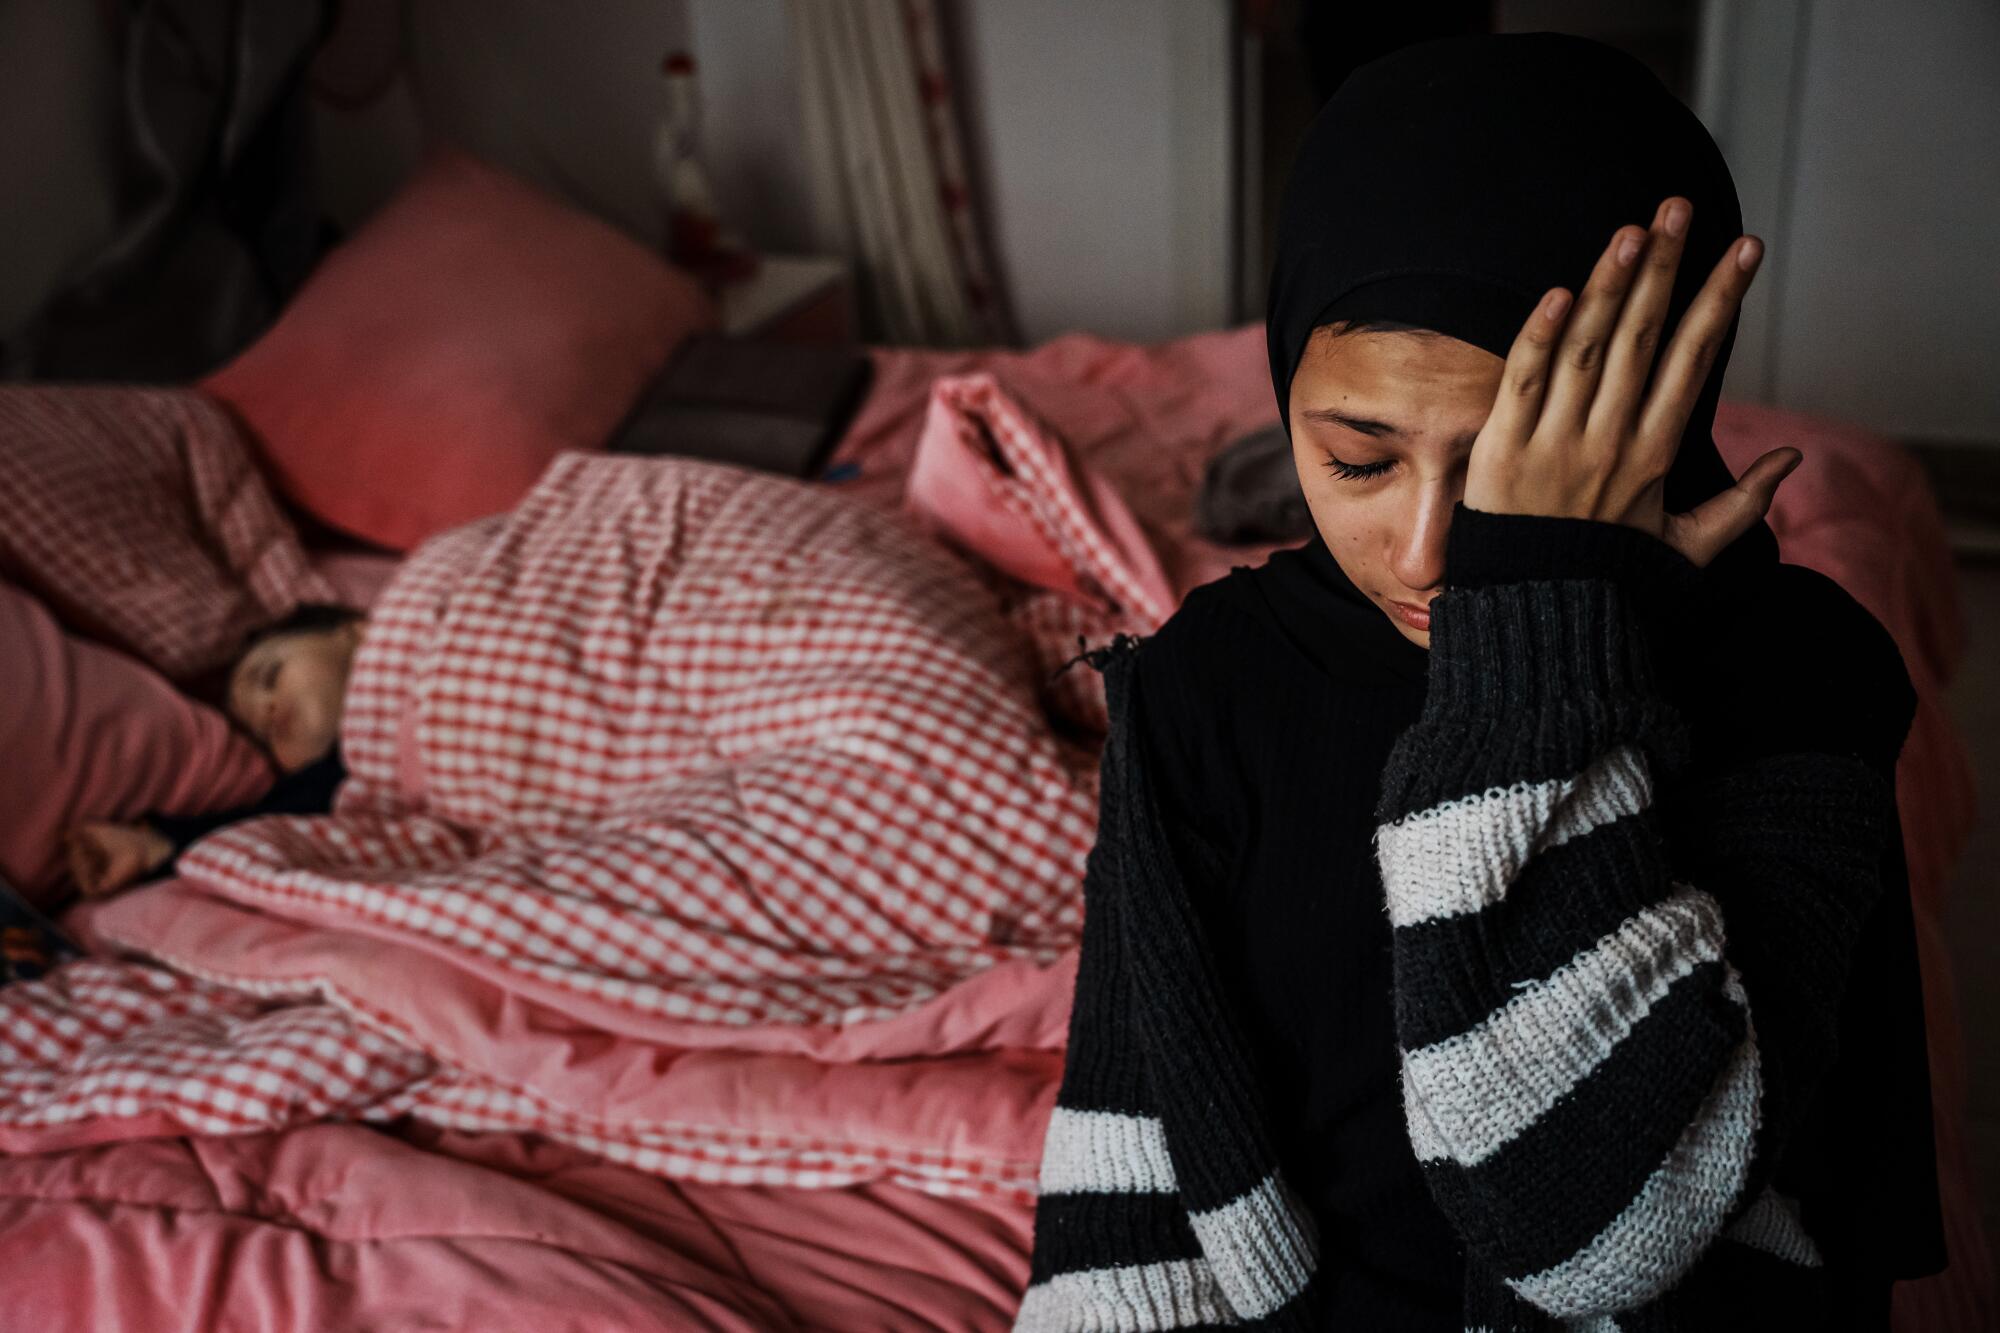 Layan Jalamneh cries while sitting near people sleeping in blankets.